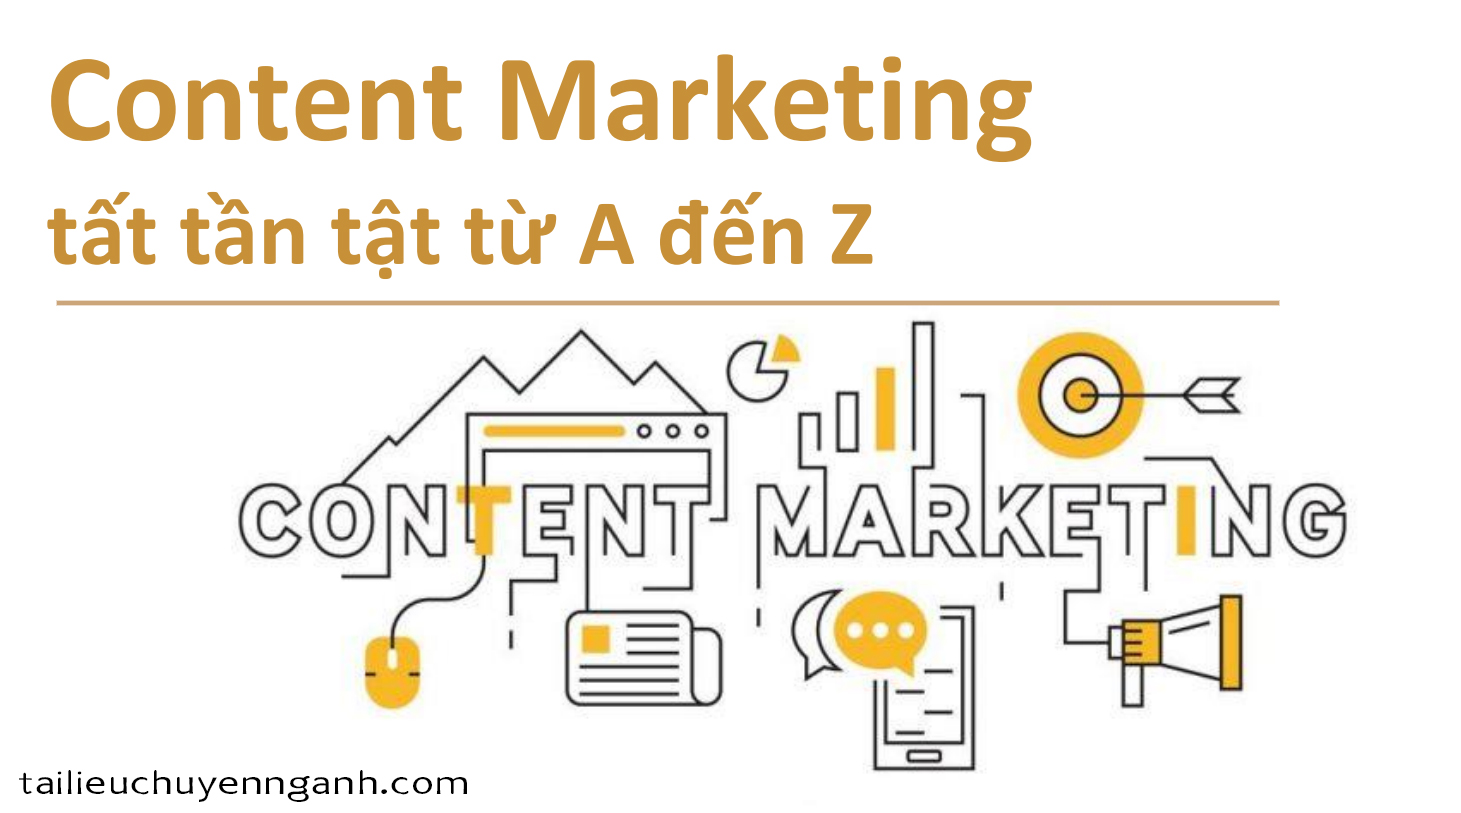 ebook-content-marketing-tat-tan-tat-tu-a-den-z